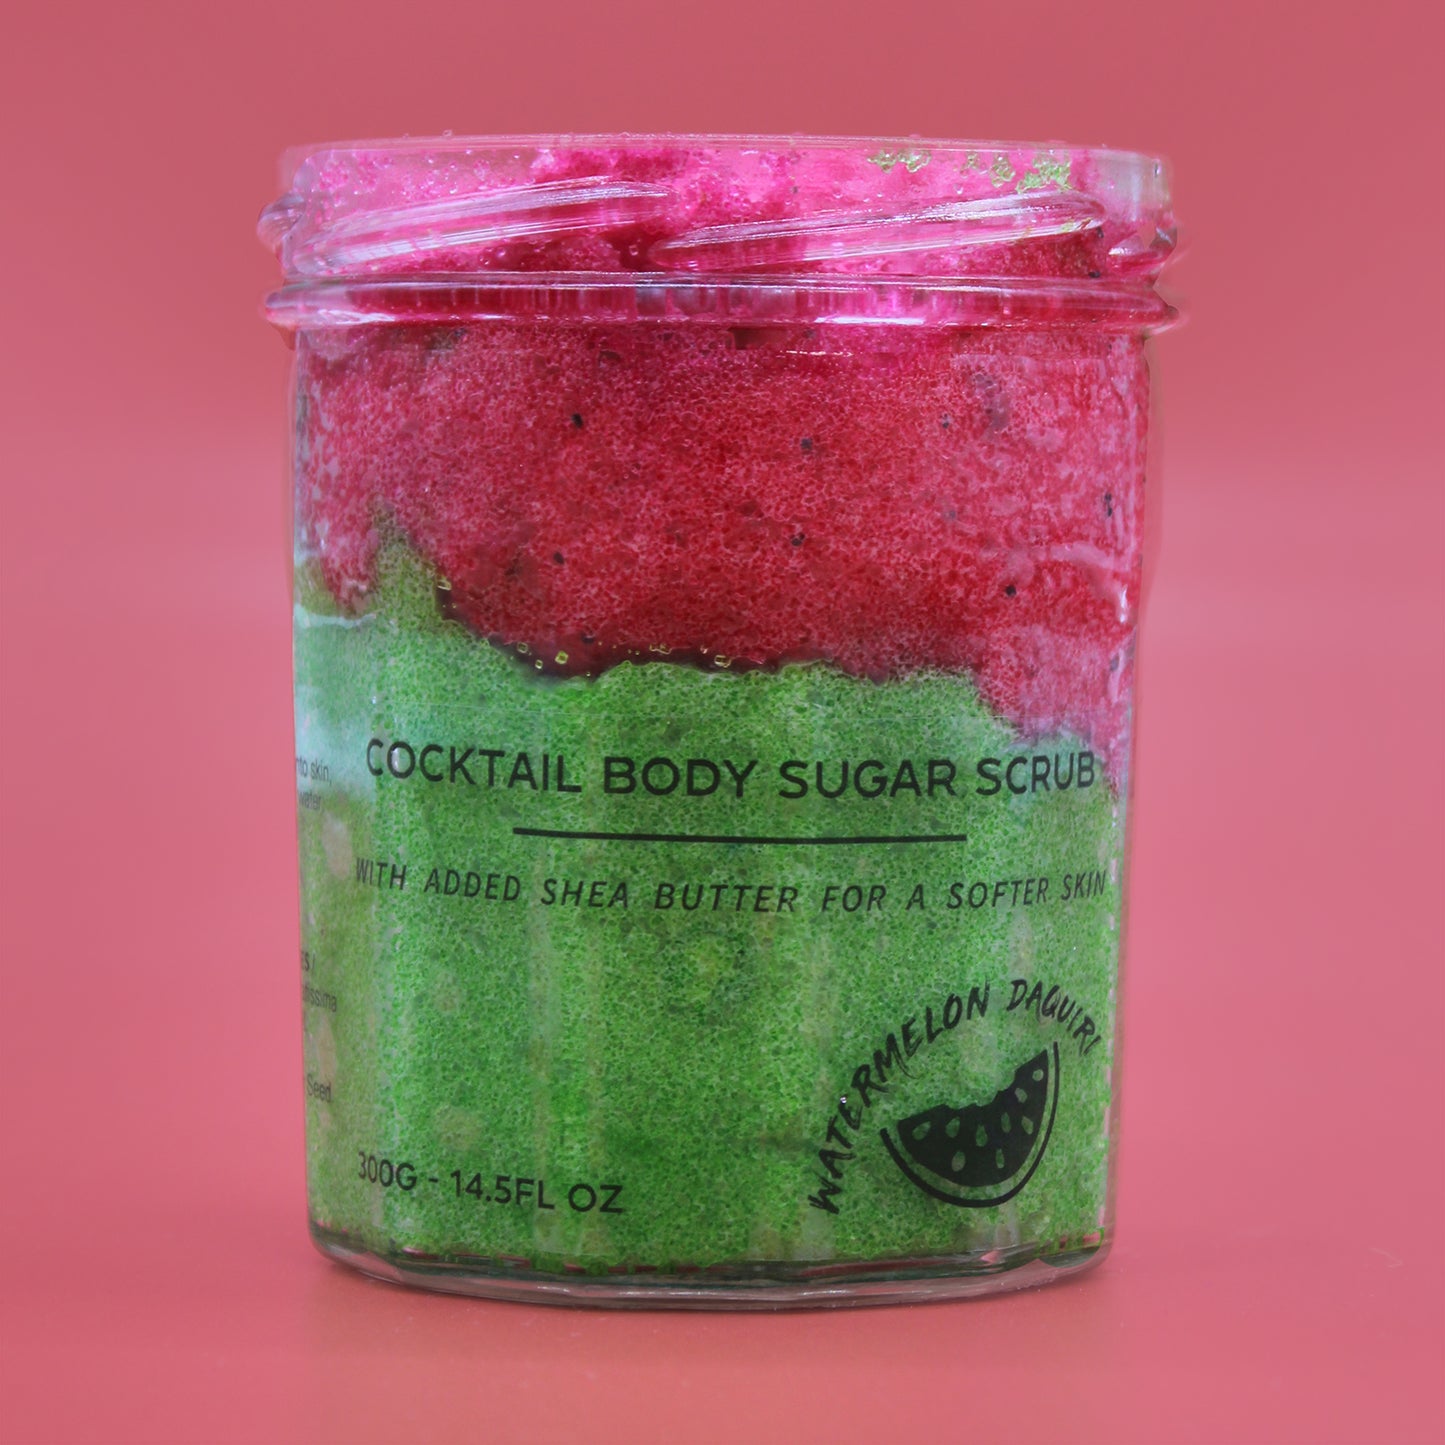 Handmade Sugar Body Scrub - Watermelon Daquiri 300g